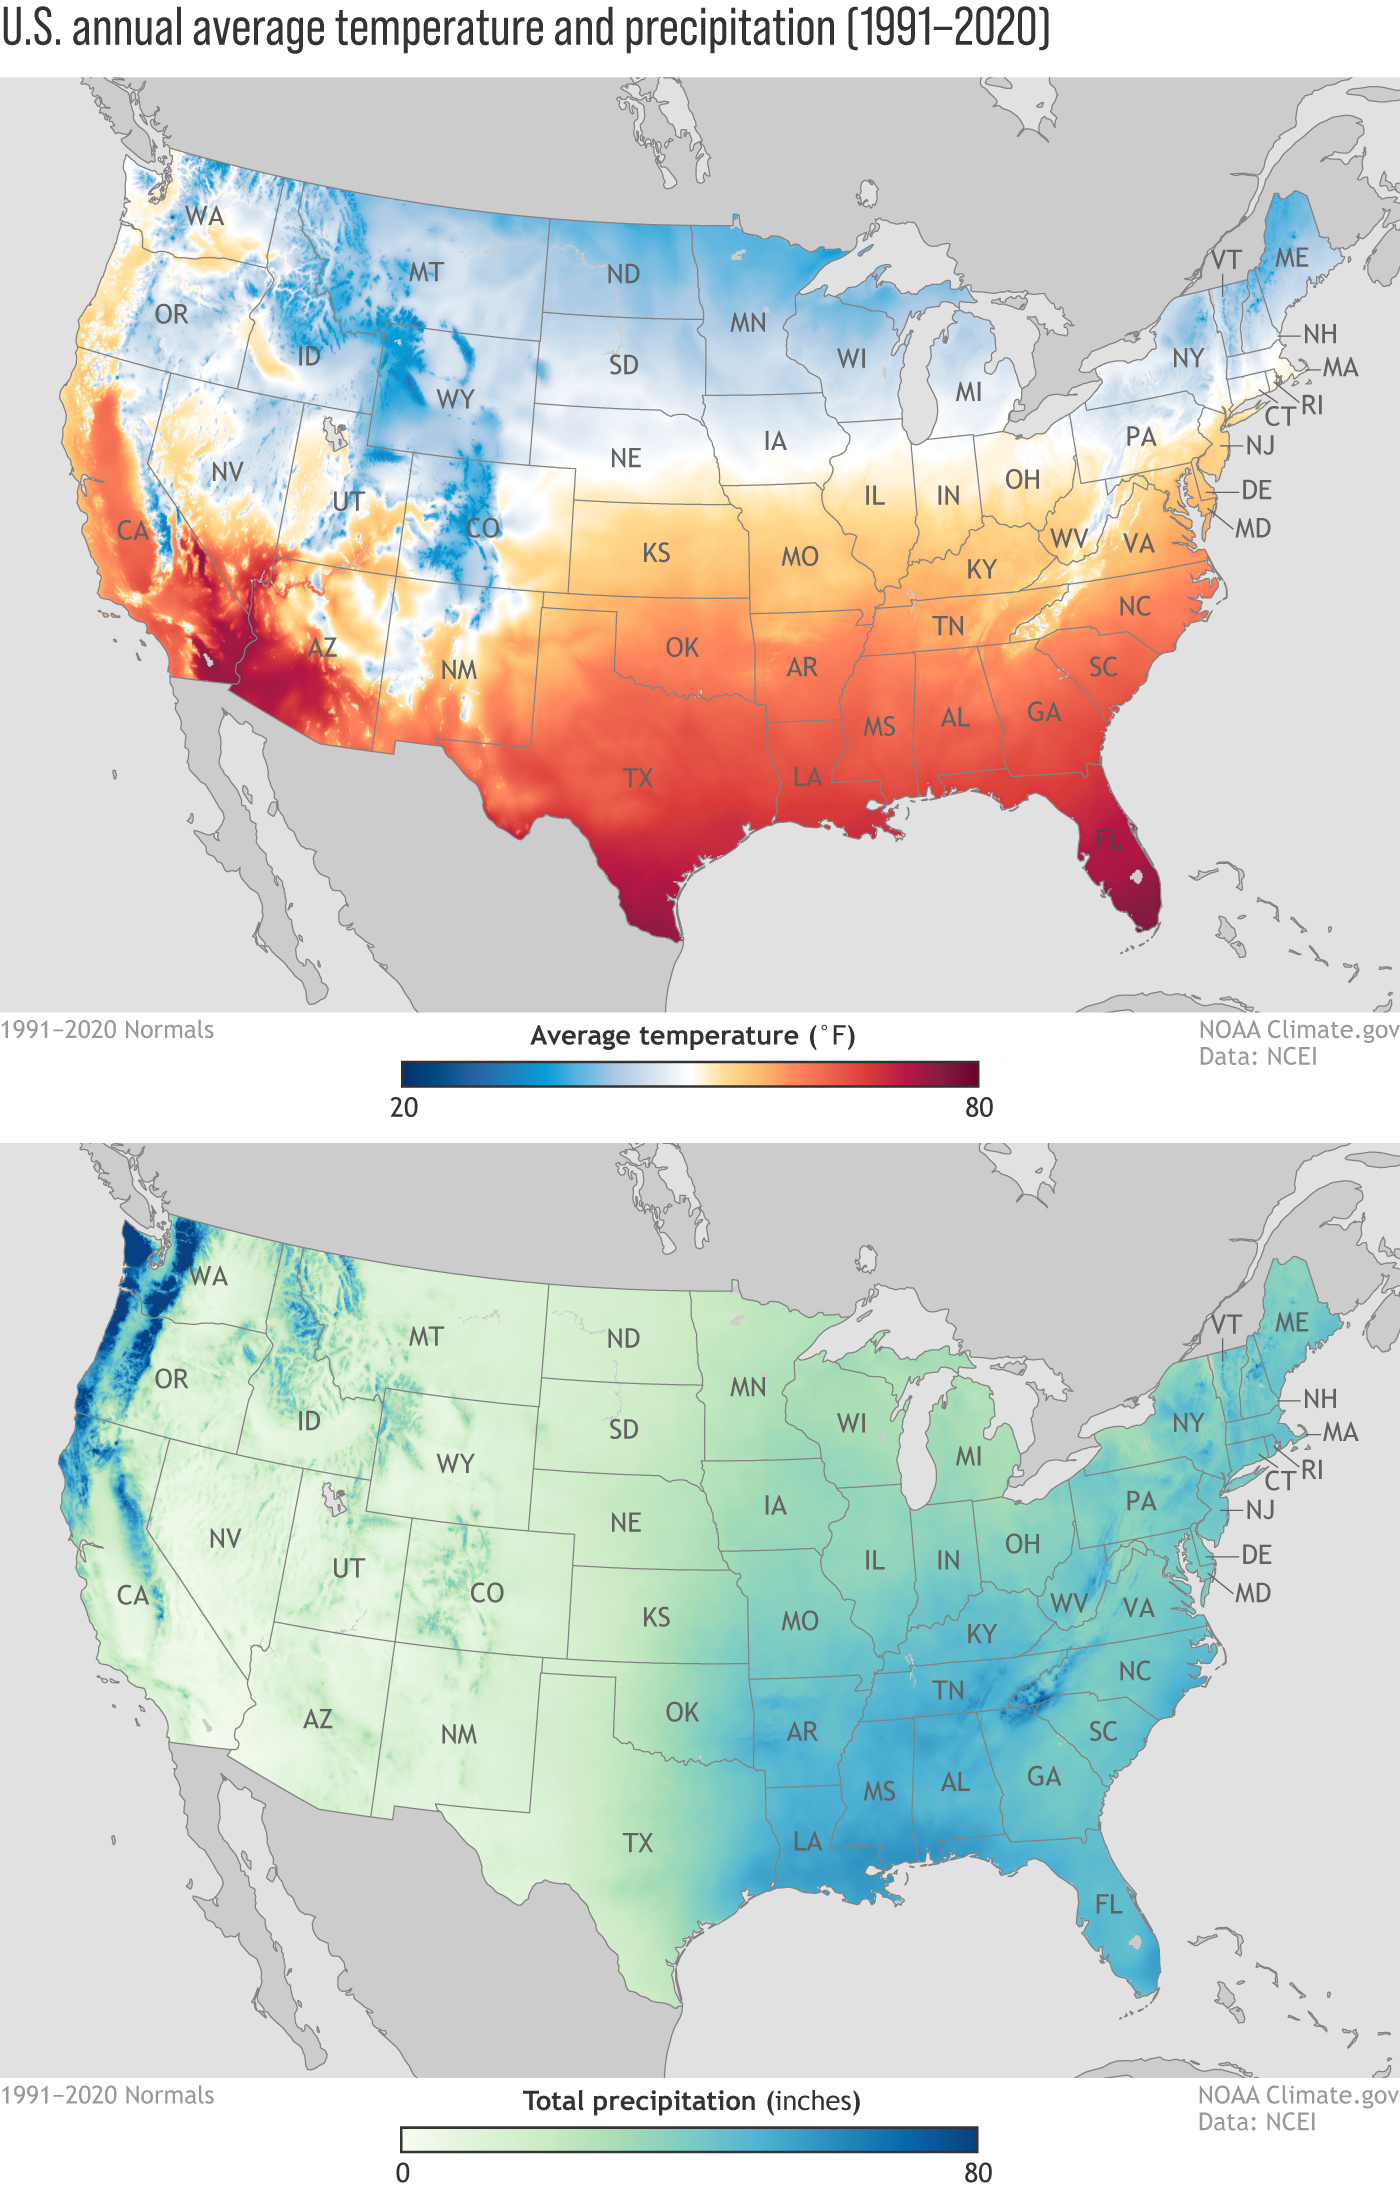 New maps of annual average temperature and precipitation from the U.S